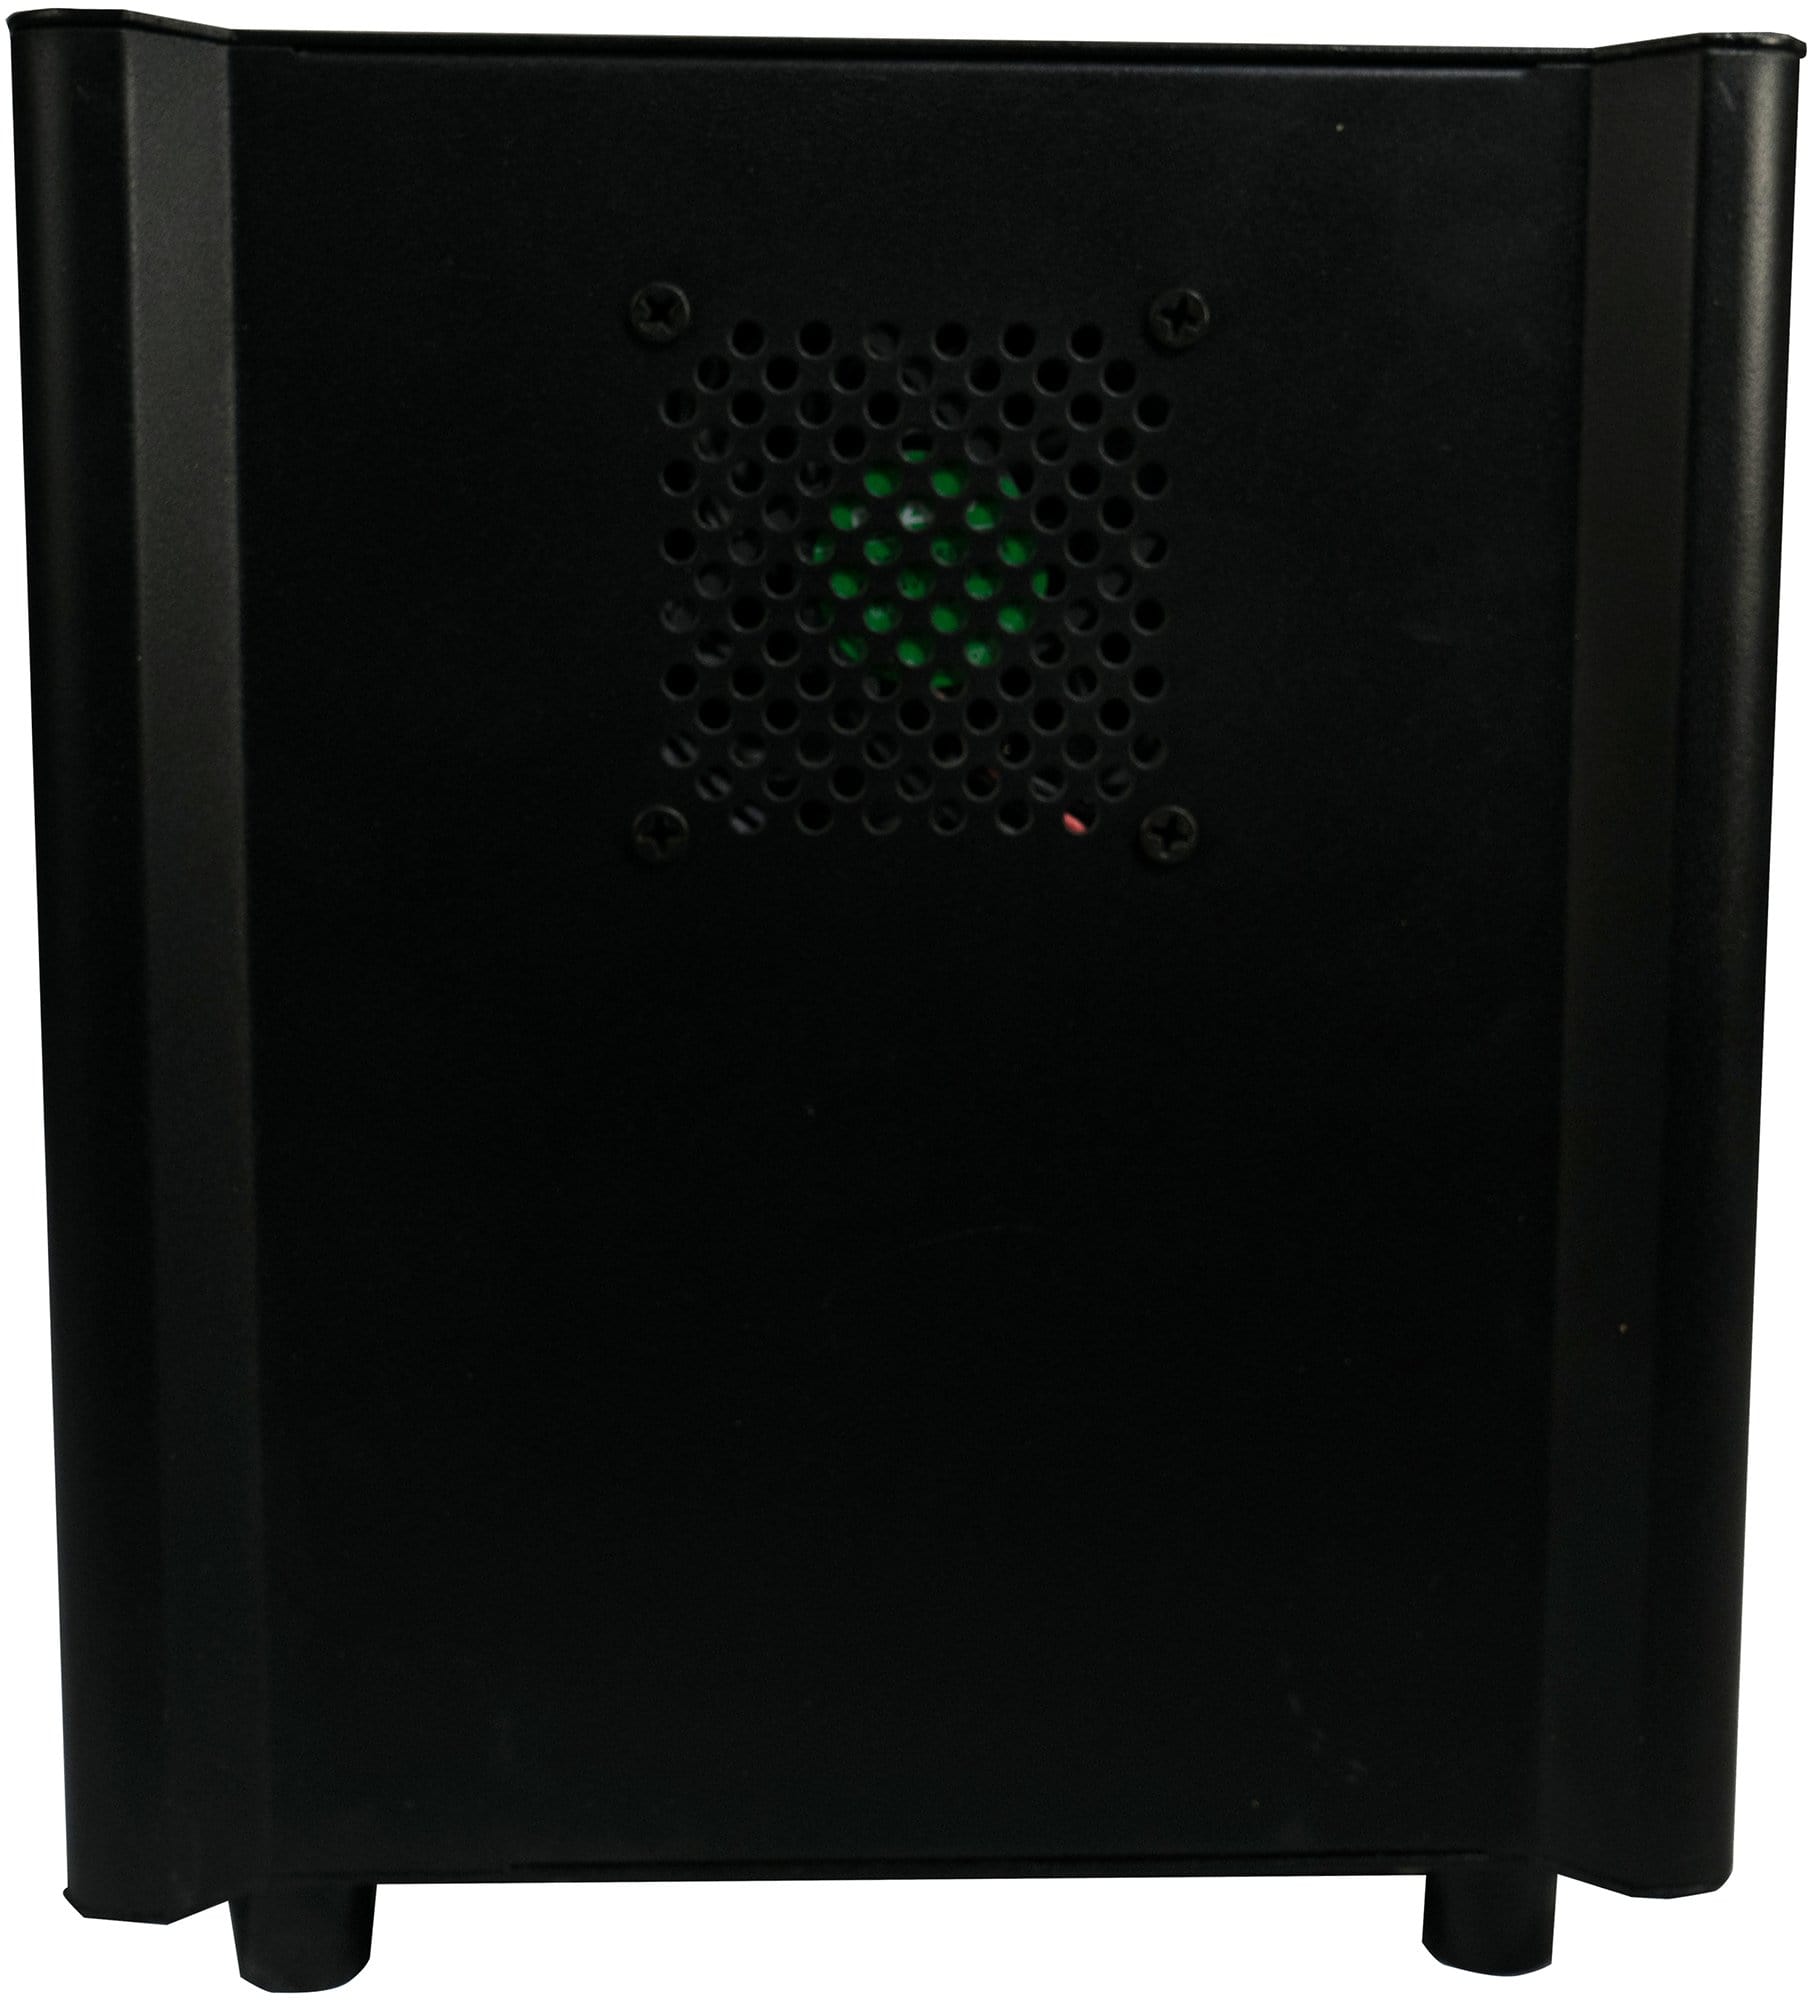 JMAZ Firestorm F3 (Black) 500W Cold Spark Machine - ProSound and Stage Lighting